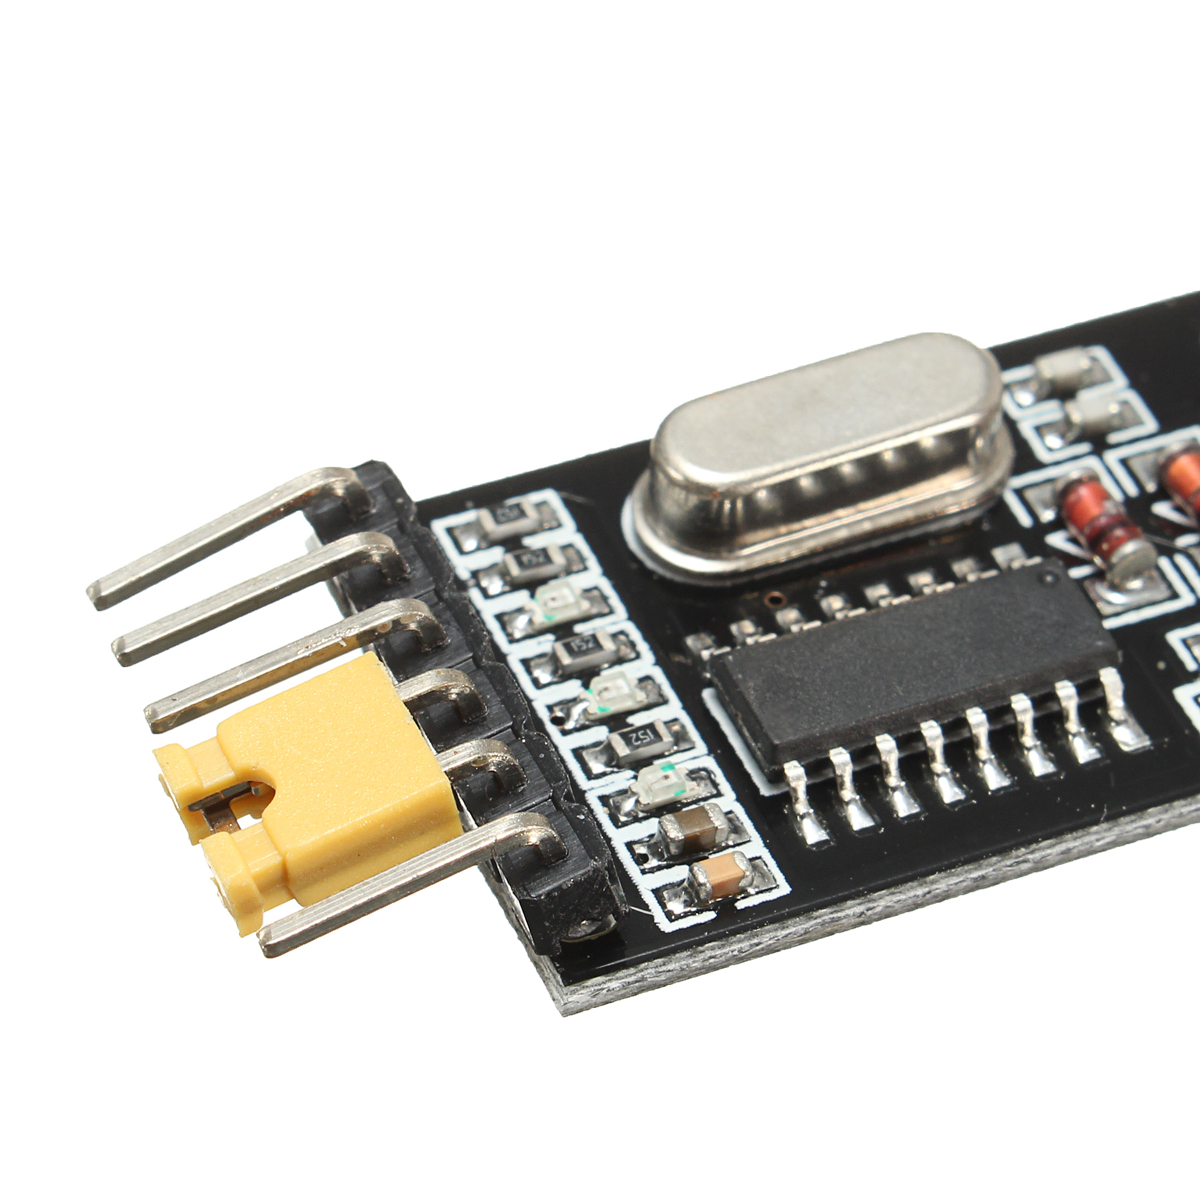 5pcs-33V-5V-USB-to-TTL-Convertor-CH340G-UART-Serial-Adapter-Module-STC-1314966-6